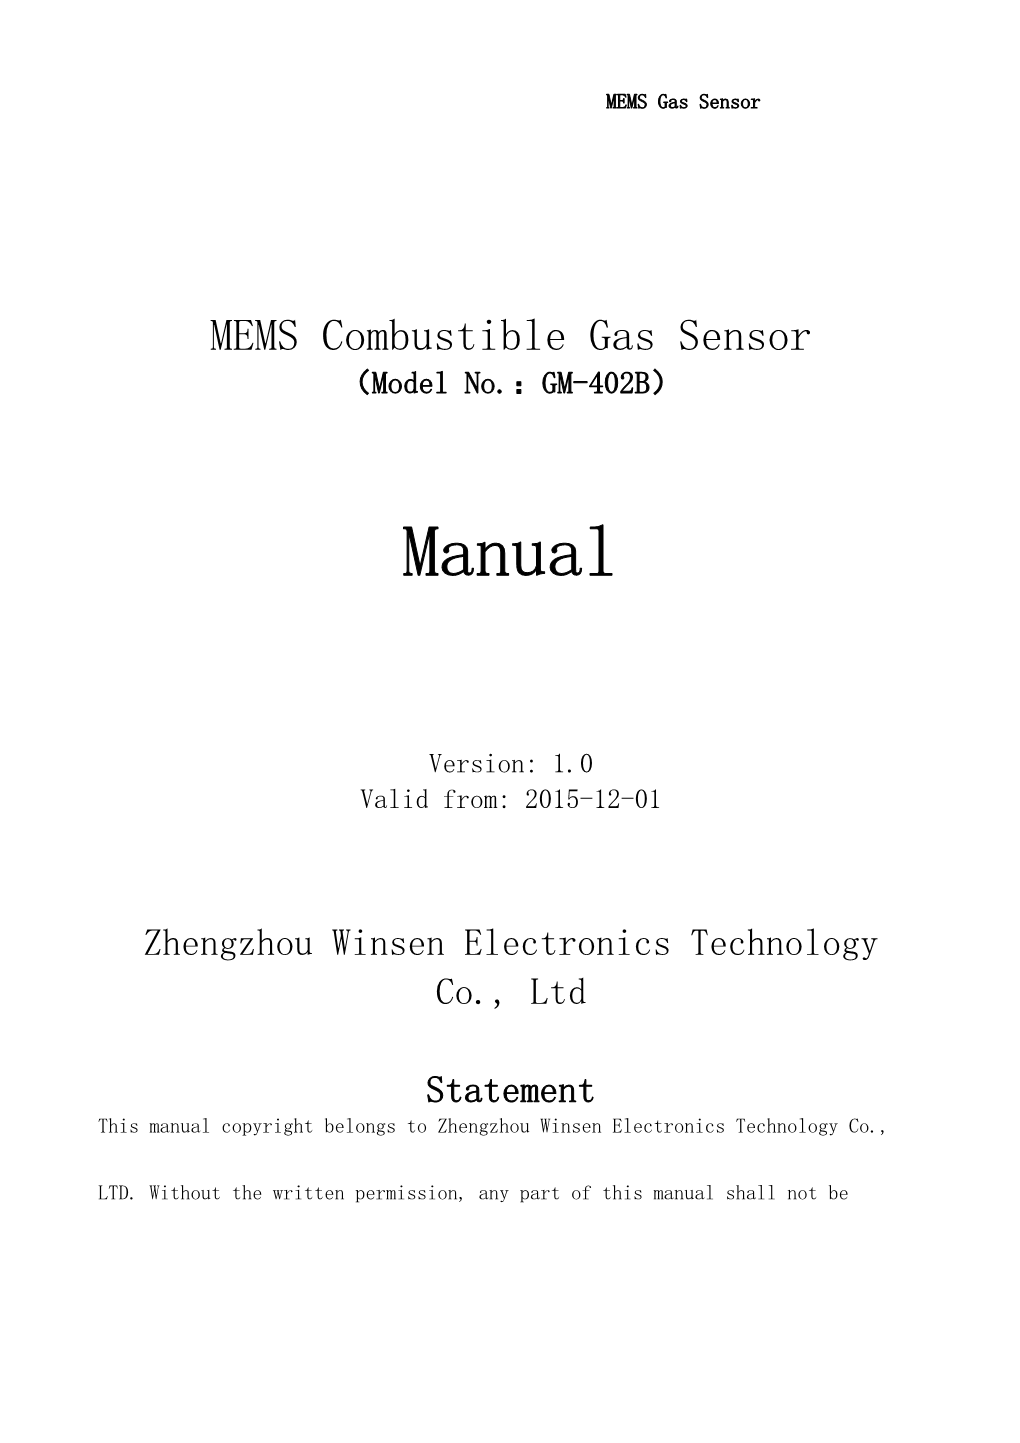 MEMS Combustible Gas Sensor